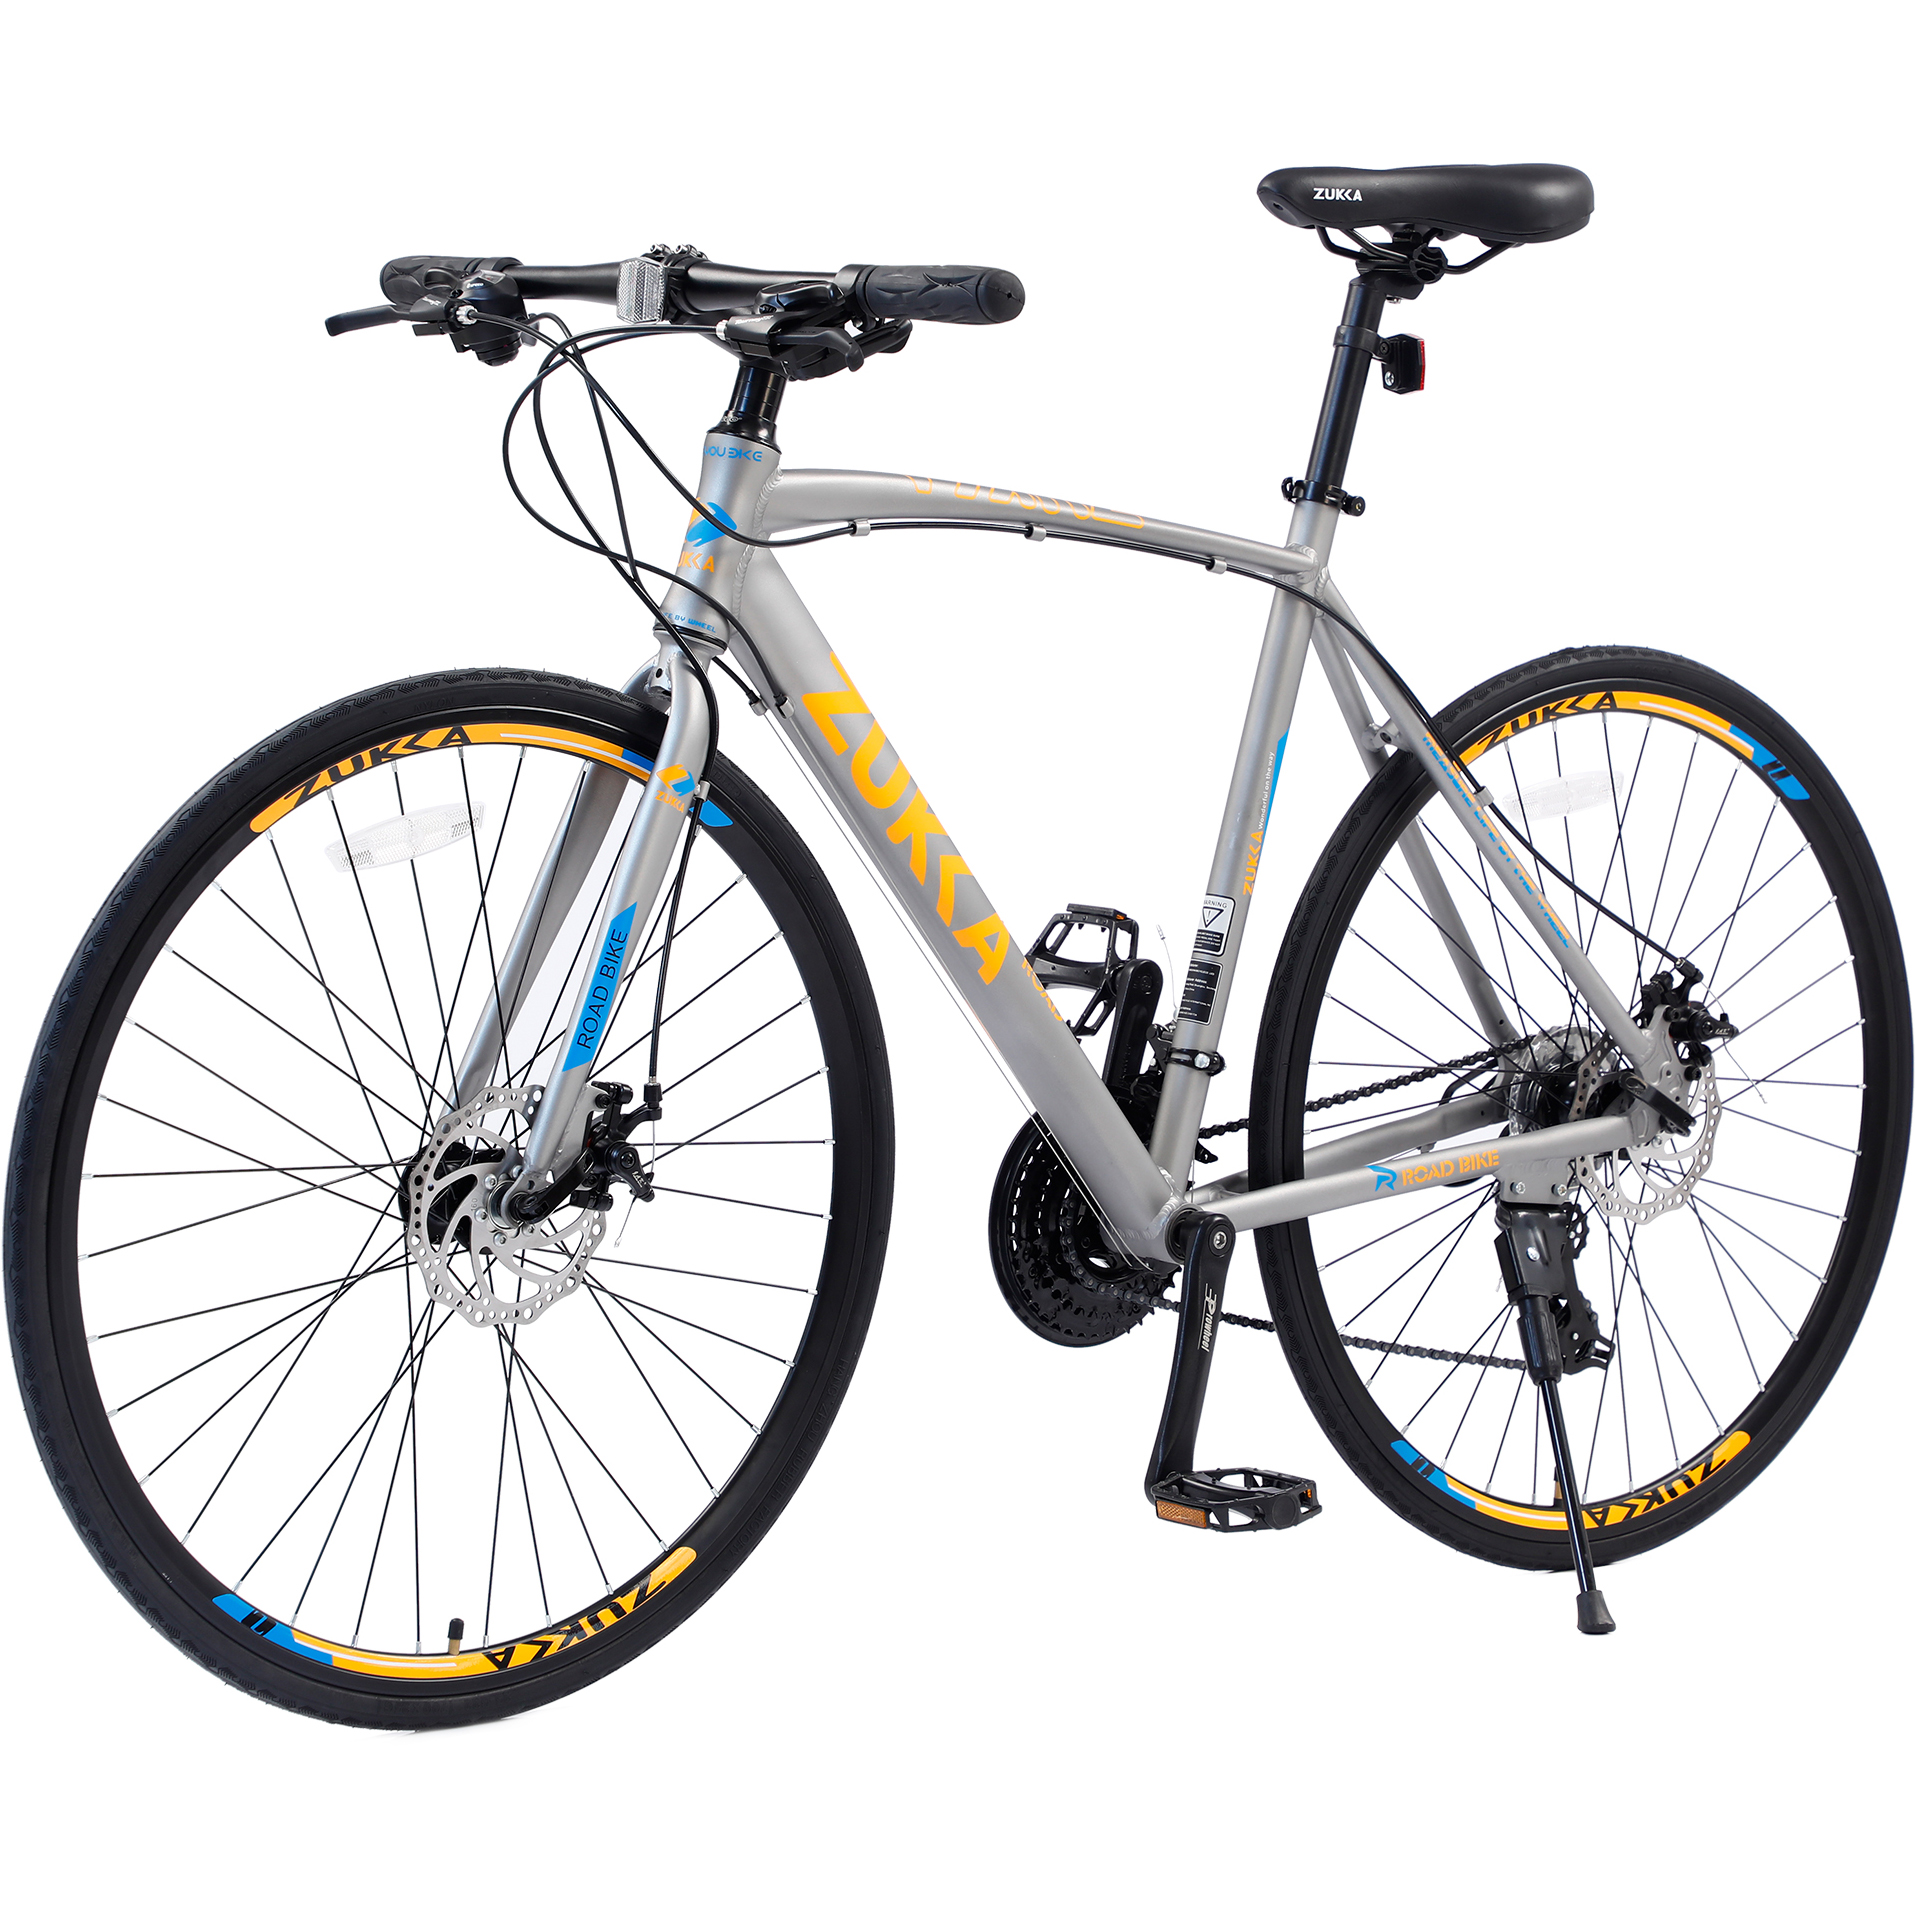 24 Speed Road Bike for Men Women, 700C Aluminum Flat Bar Road Bike with Disc Brakes, Gray - image 1 of 6